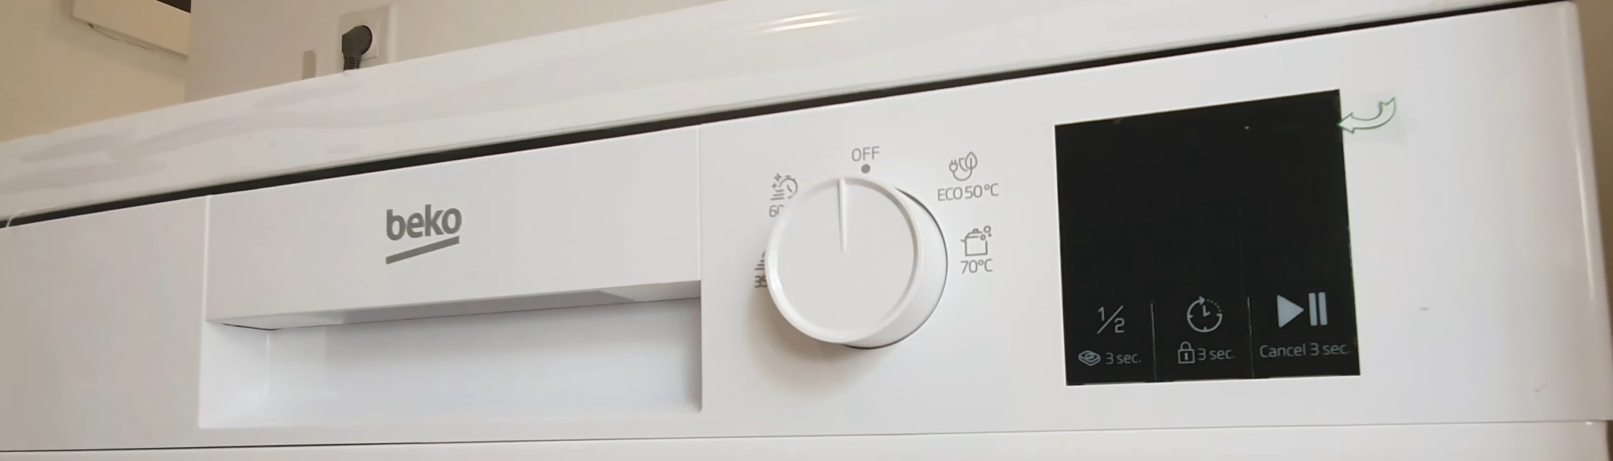 Beko Dishwasher with control panel